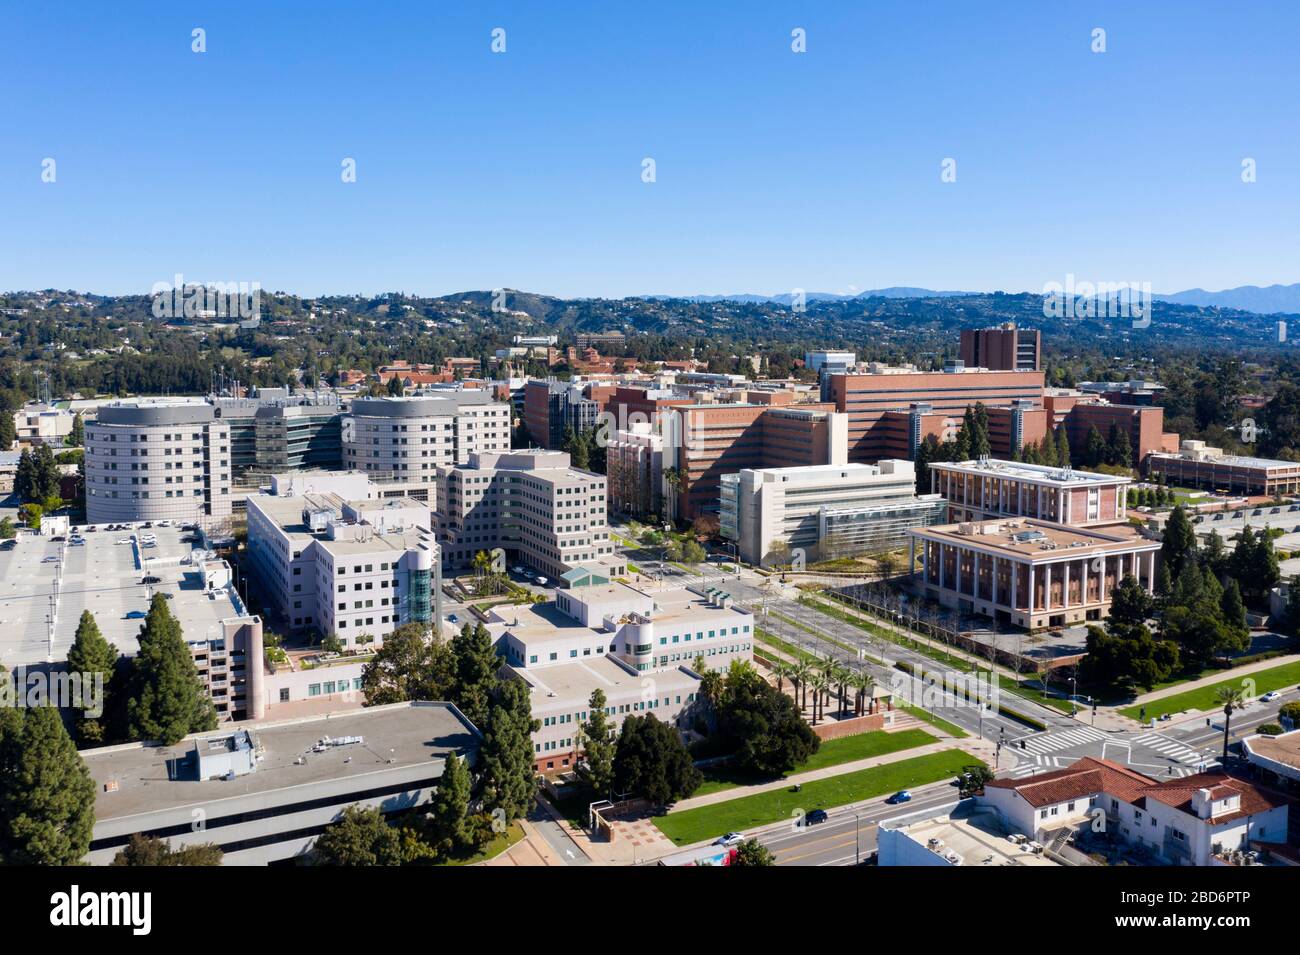 Vista aerea del centro medico UCLA e del campus di Westwood, Los Angeles Foto Stock